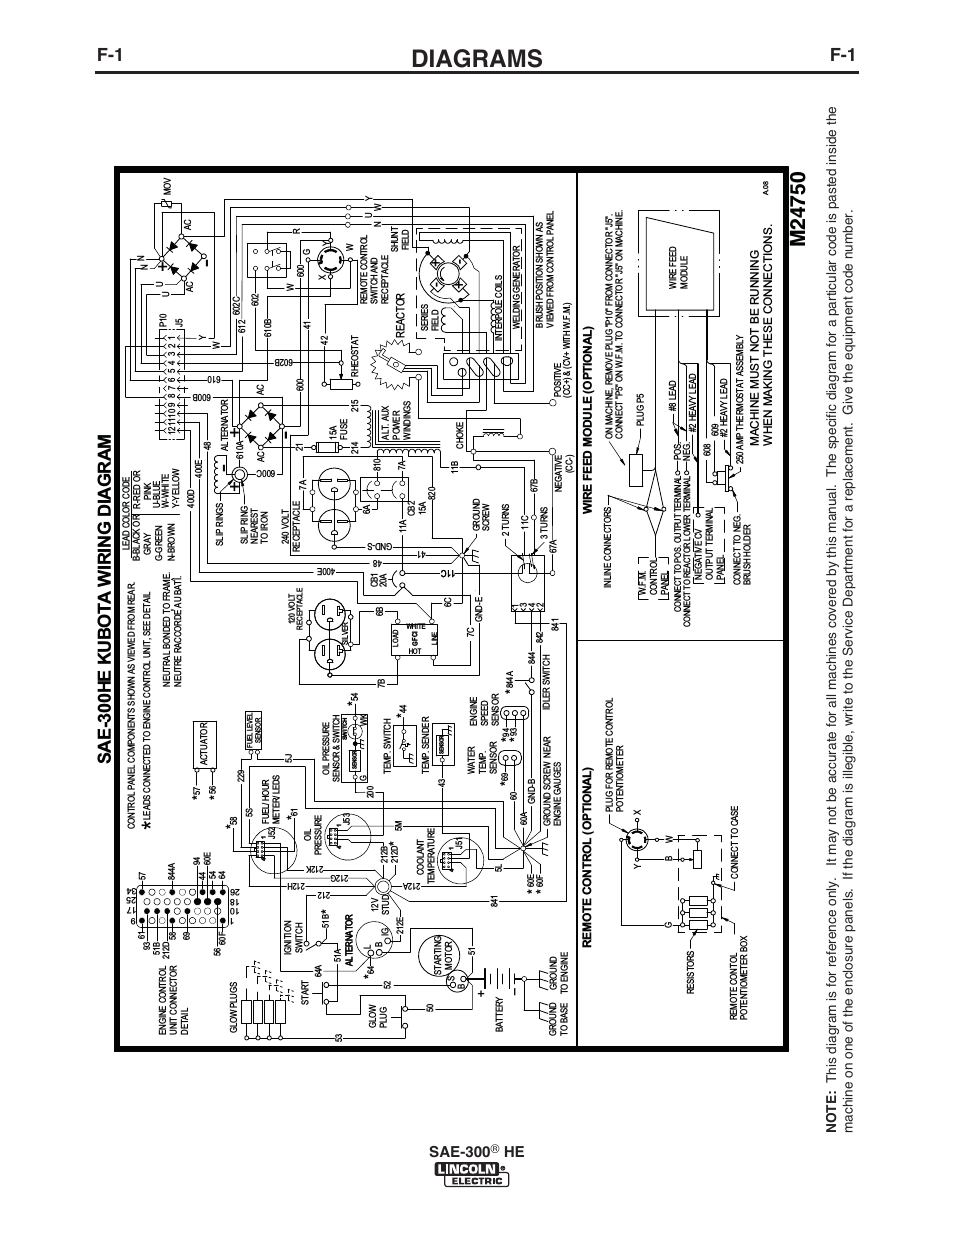 ram 300 diagram 1 wiring diagram source diagrams sae 3 00 he kubo ta wi